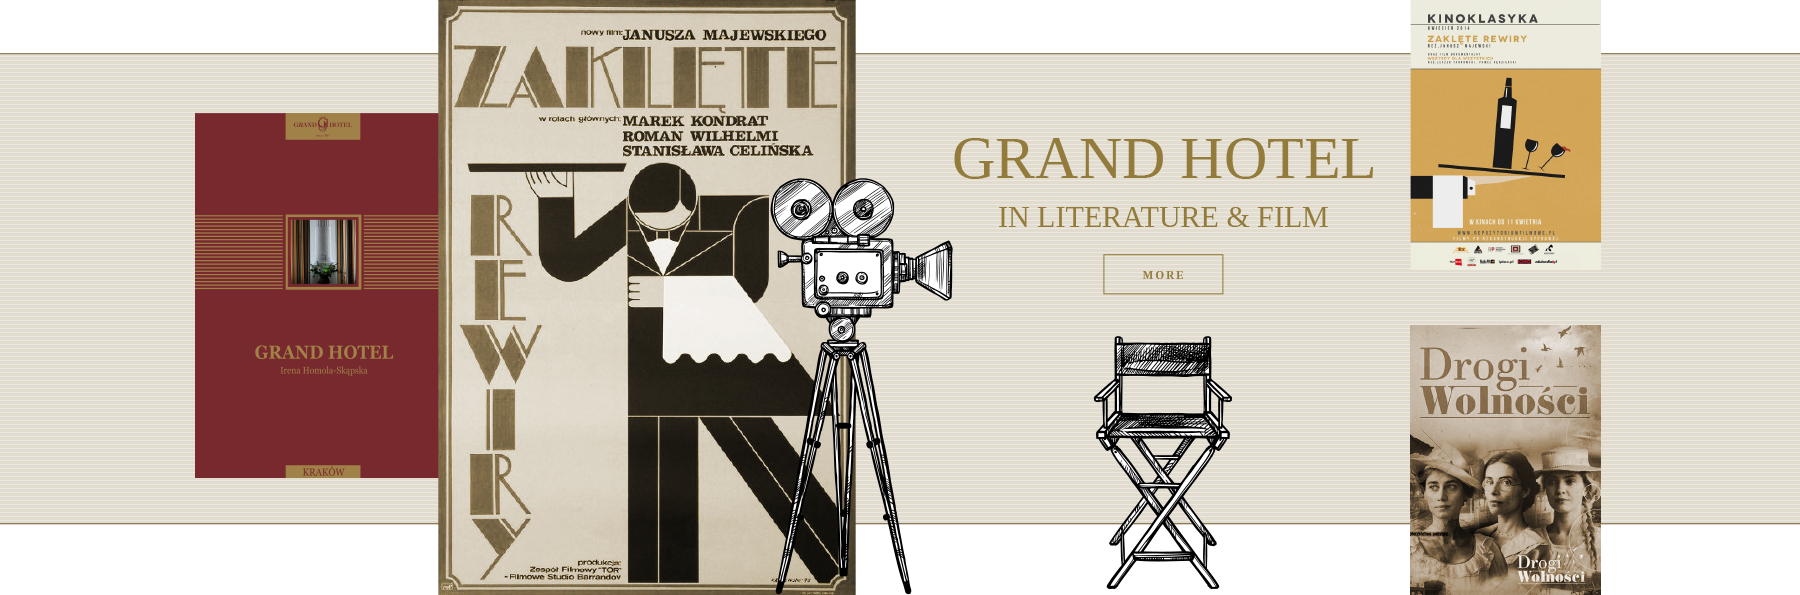 Grand Hotel in literature and film